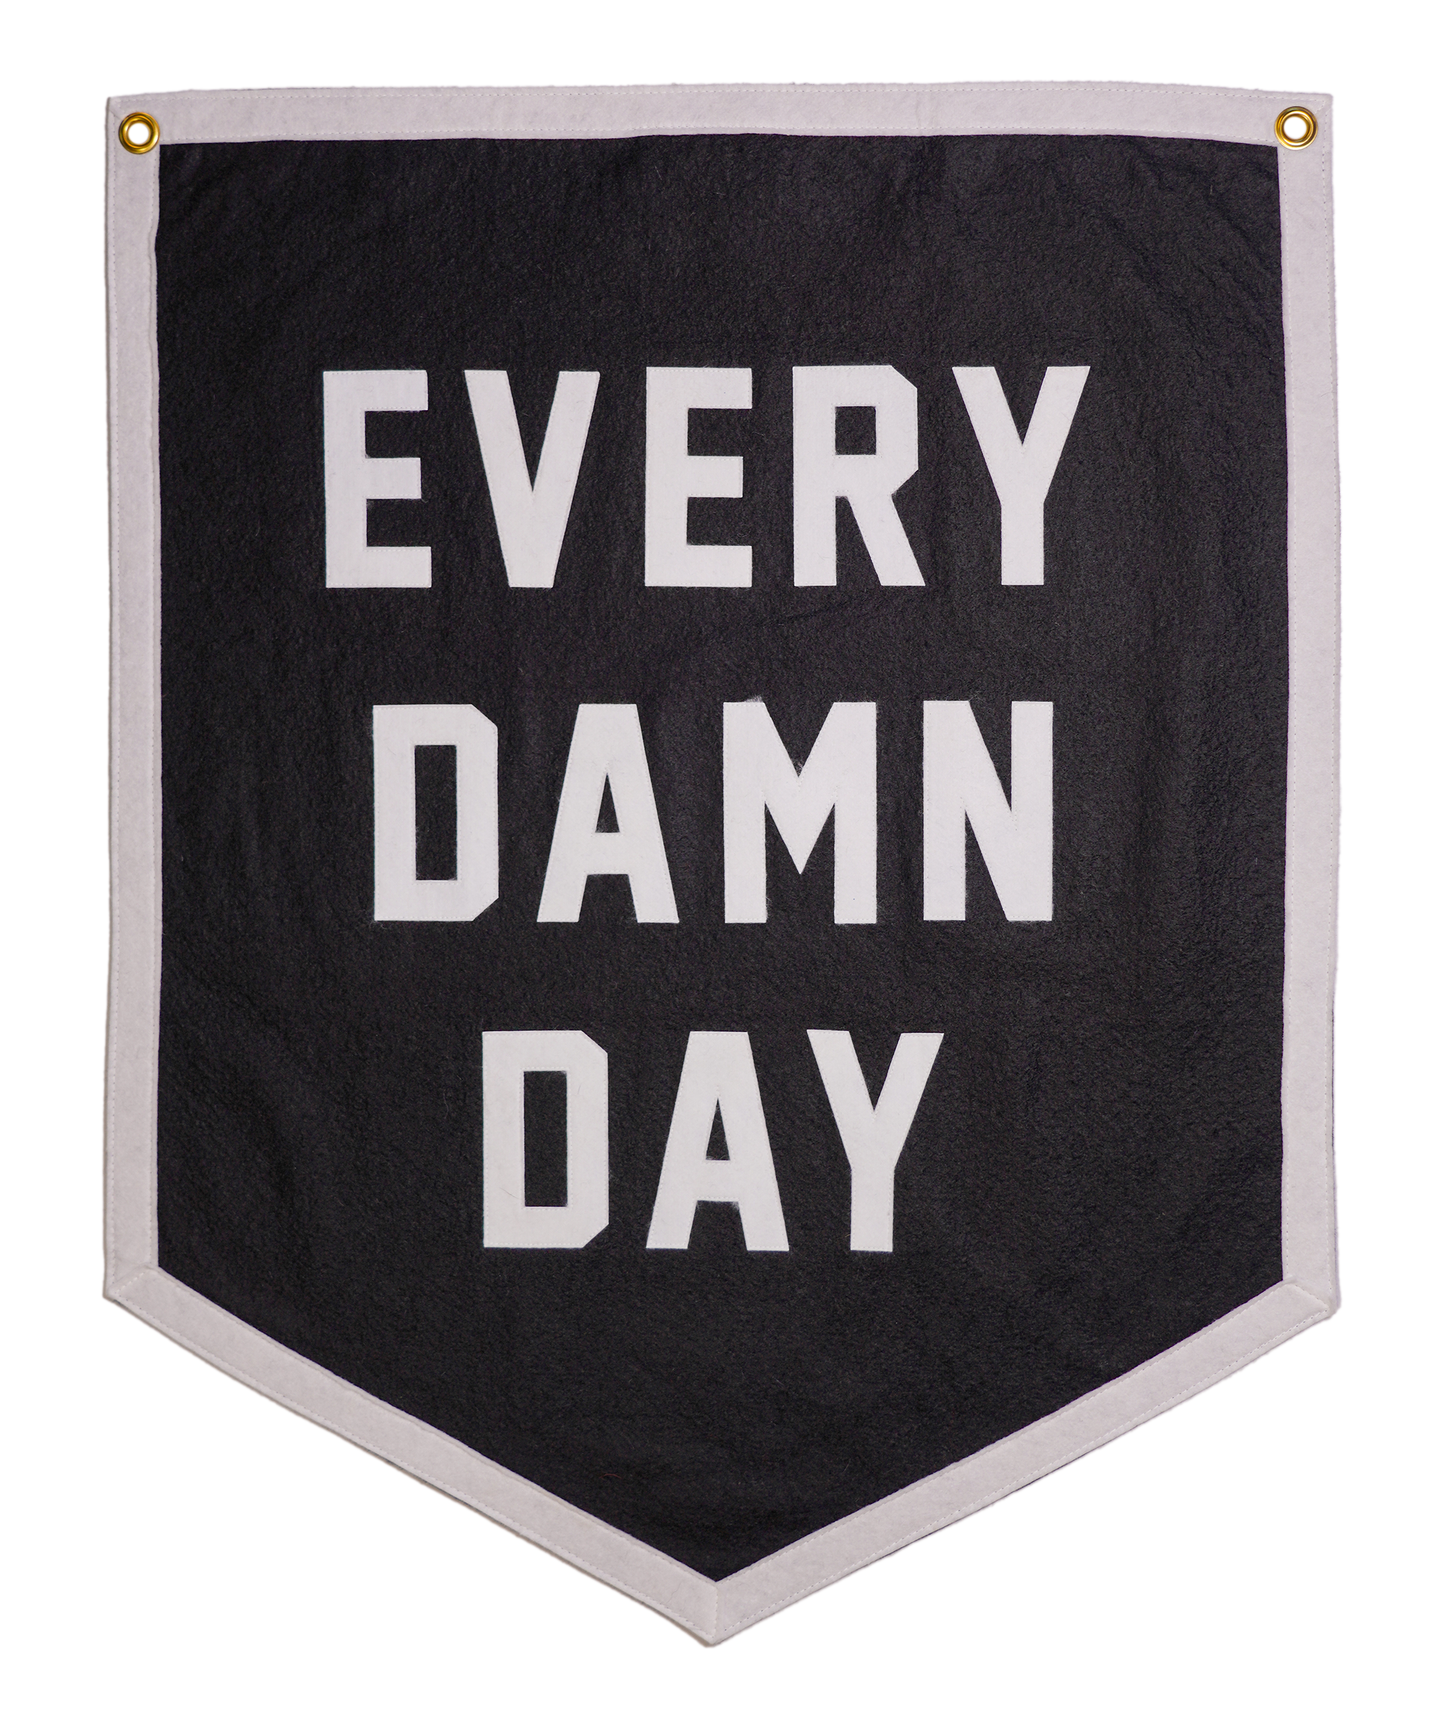 Every Damn Day Championship Banner